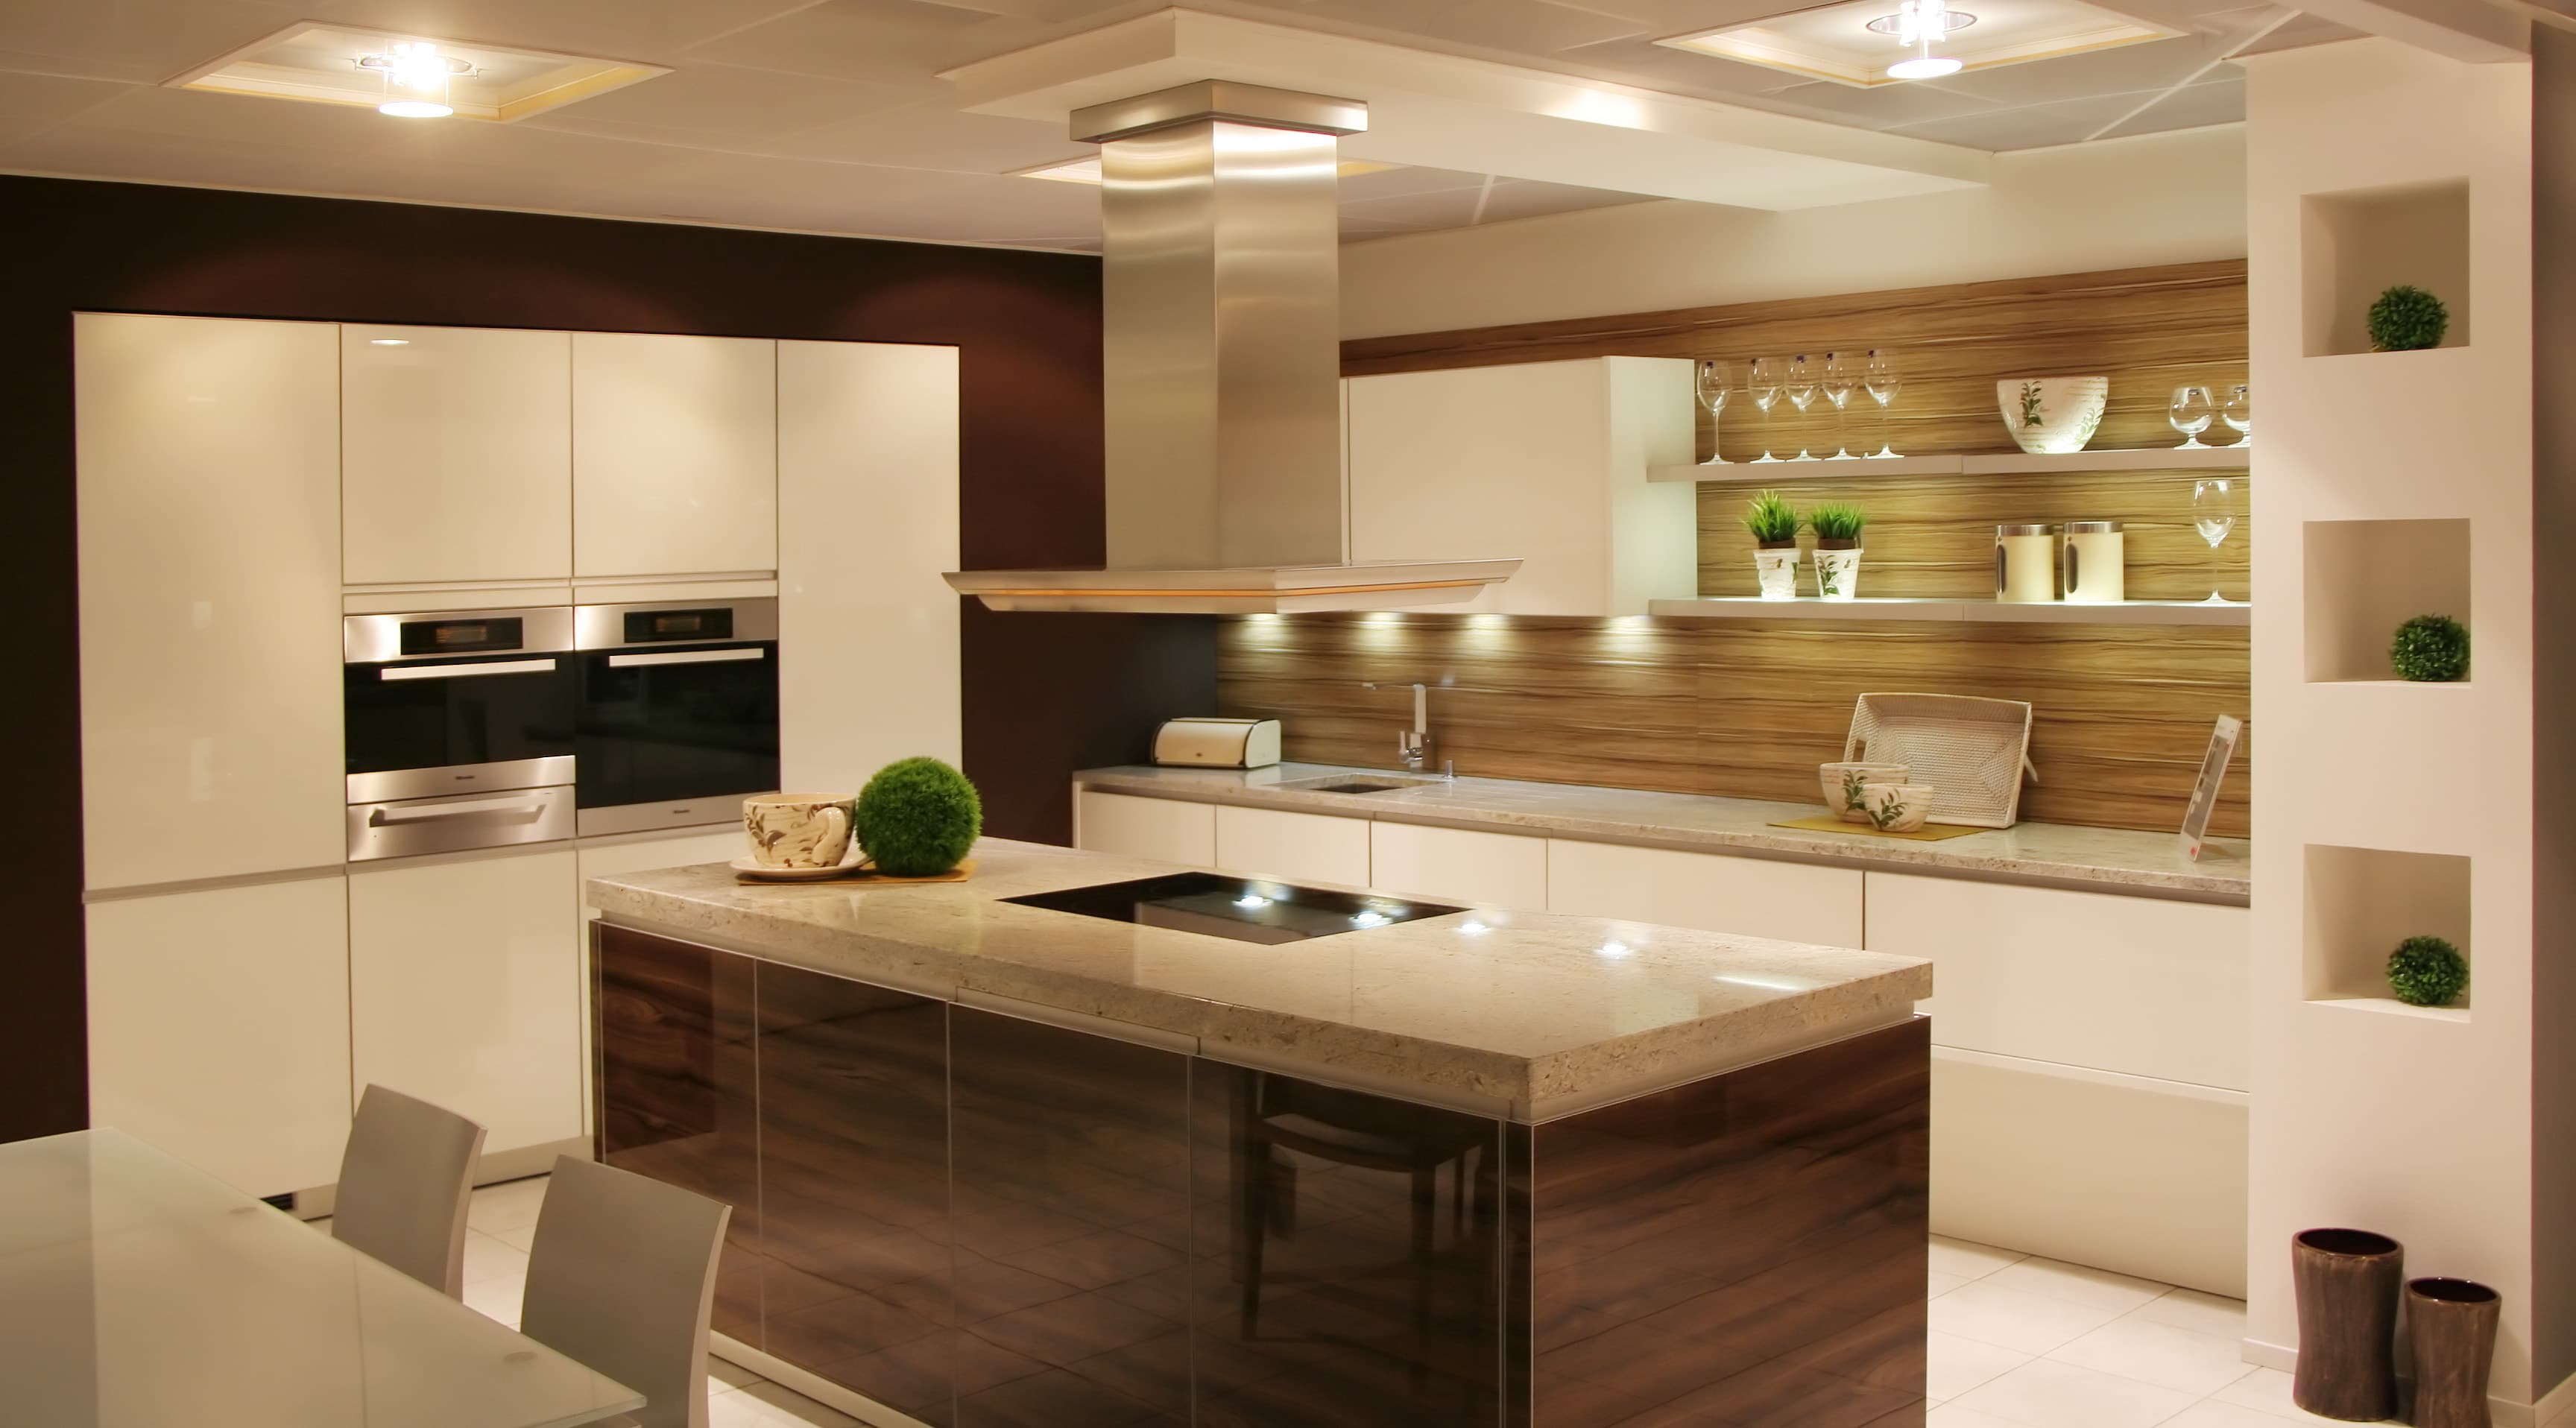 Kitchen with modern cabinet lighting